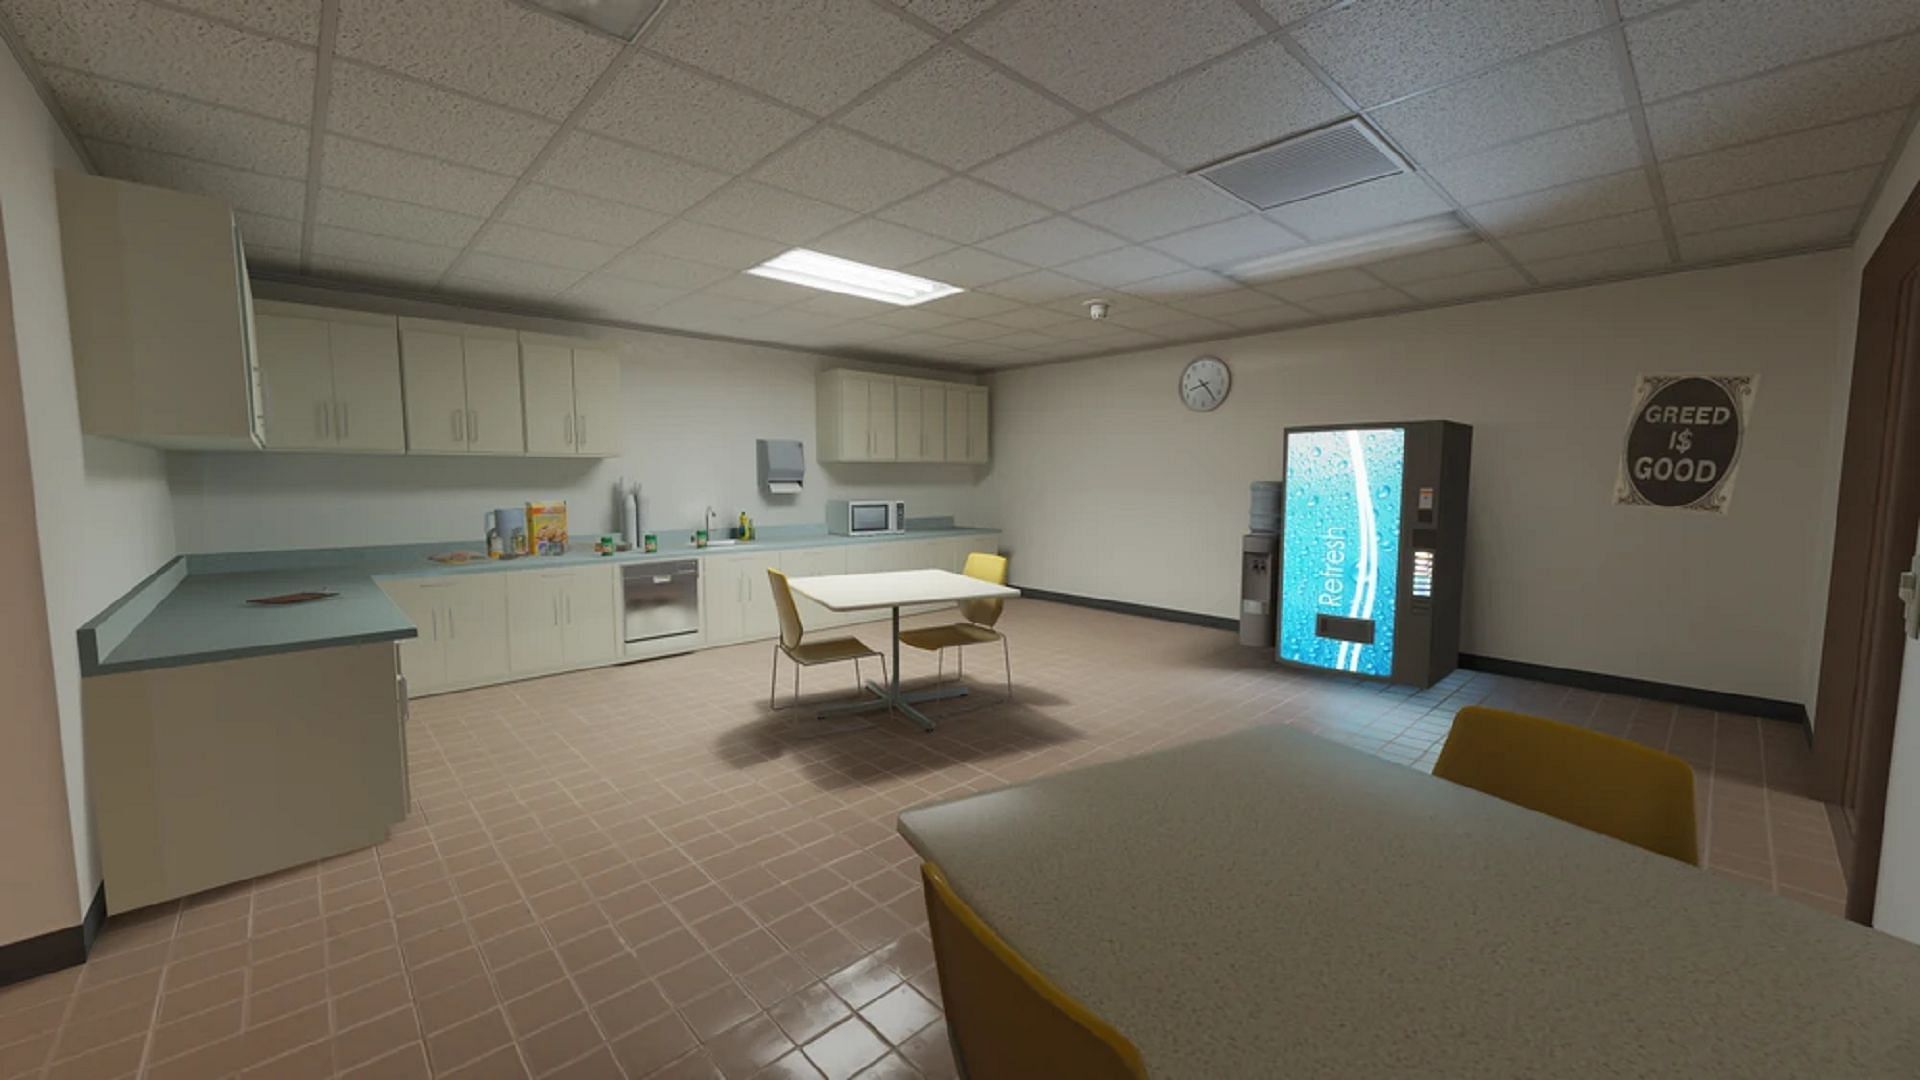 Office in CS2 (Image via Valve)